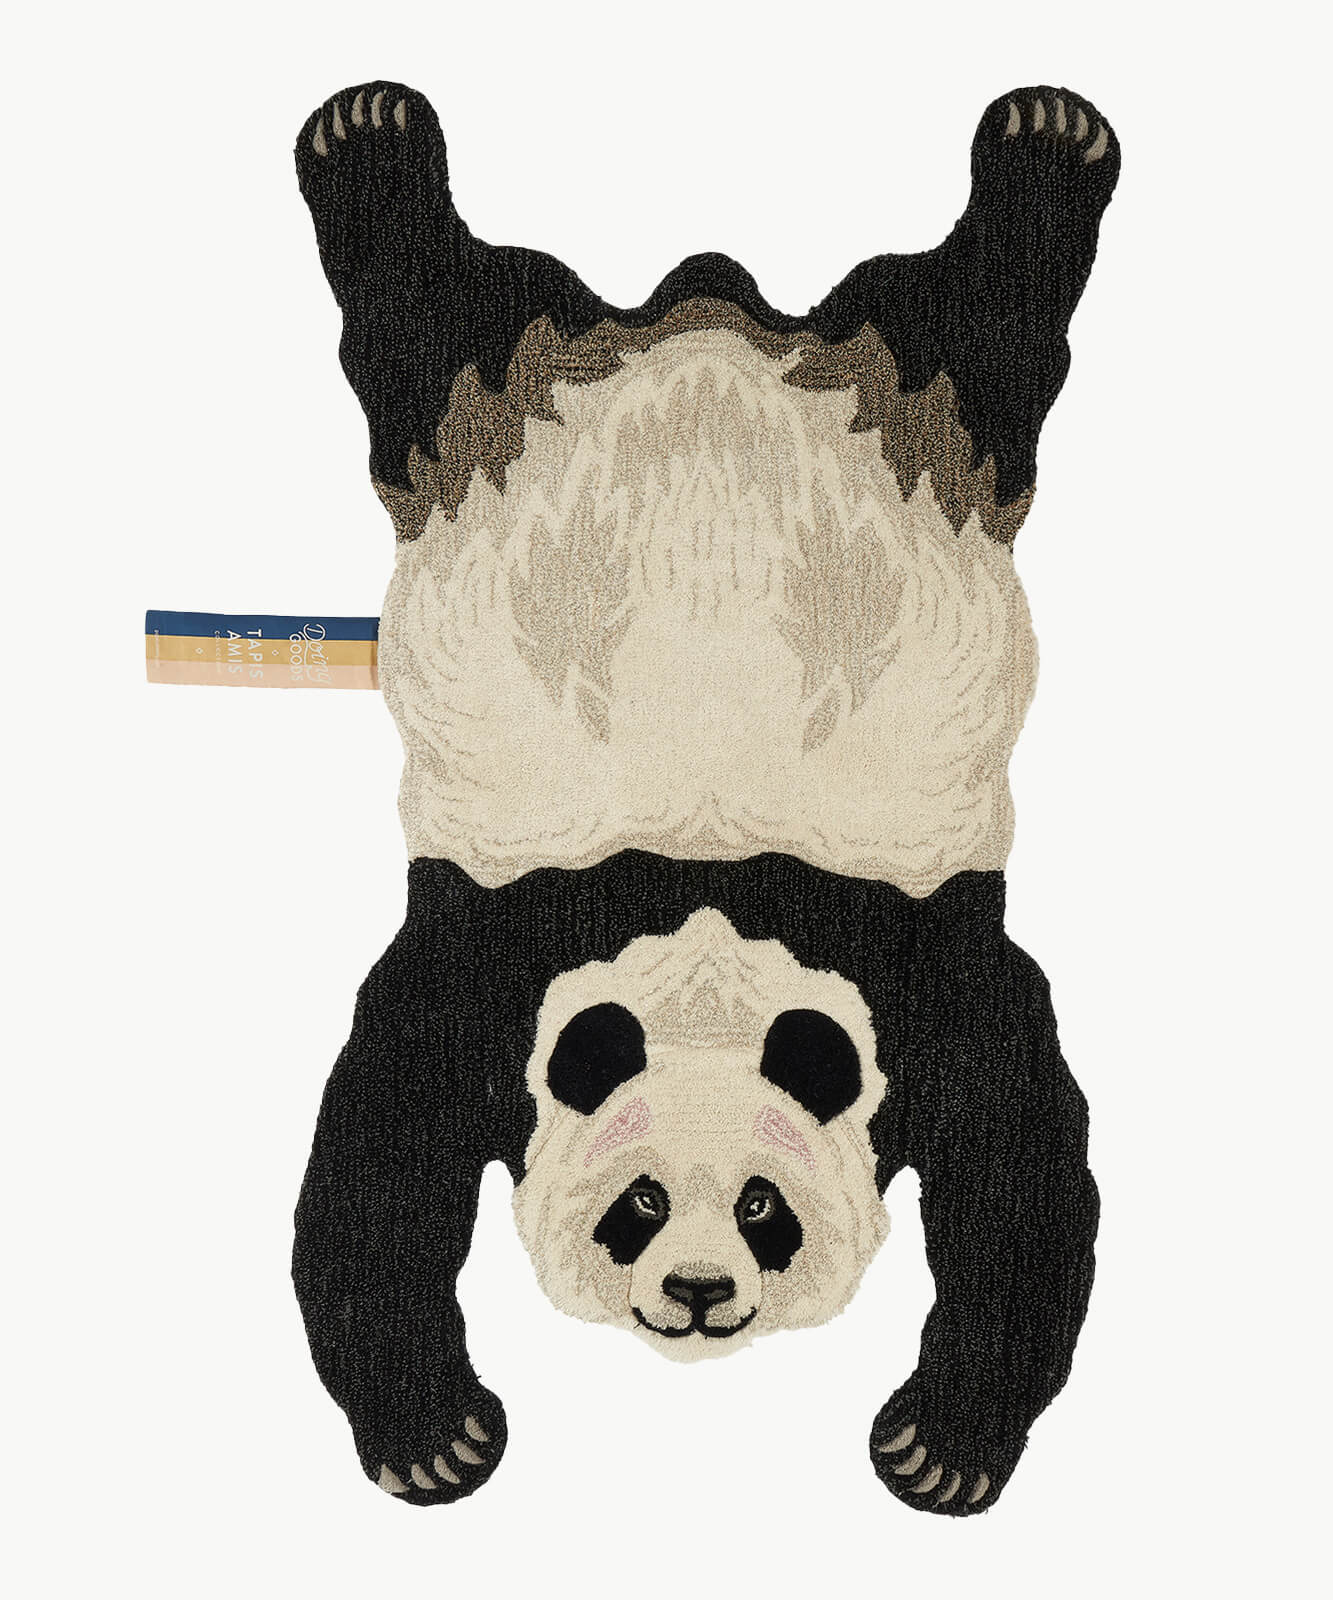 Plumpy Panda Rug Large